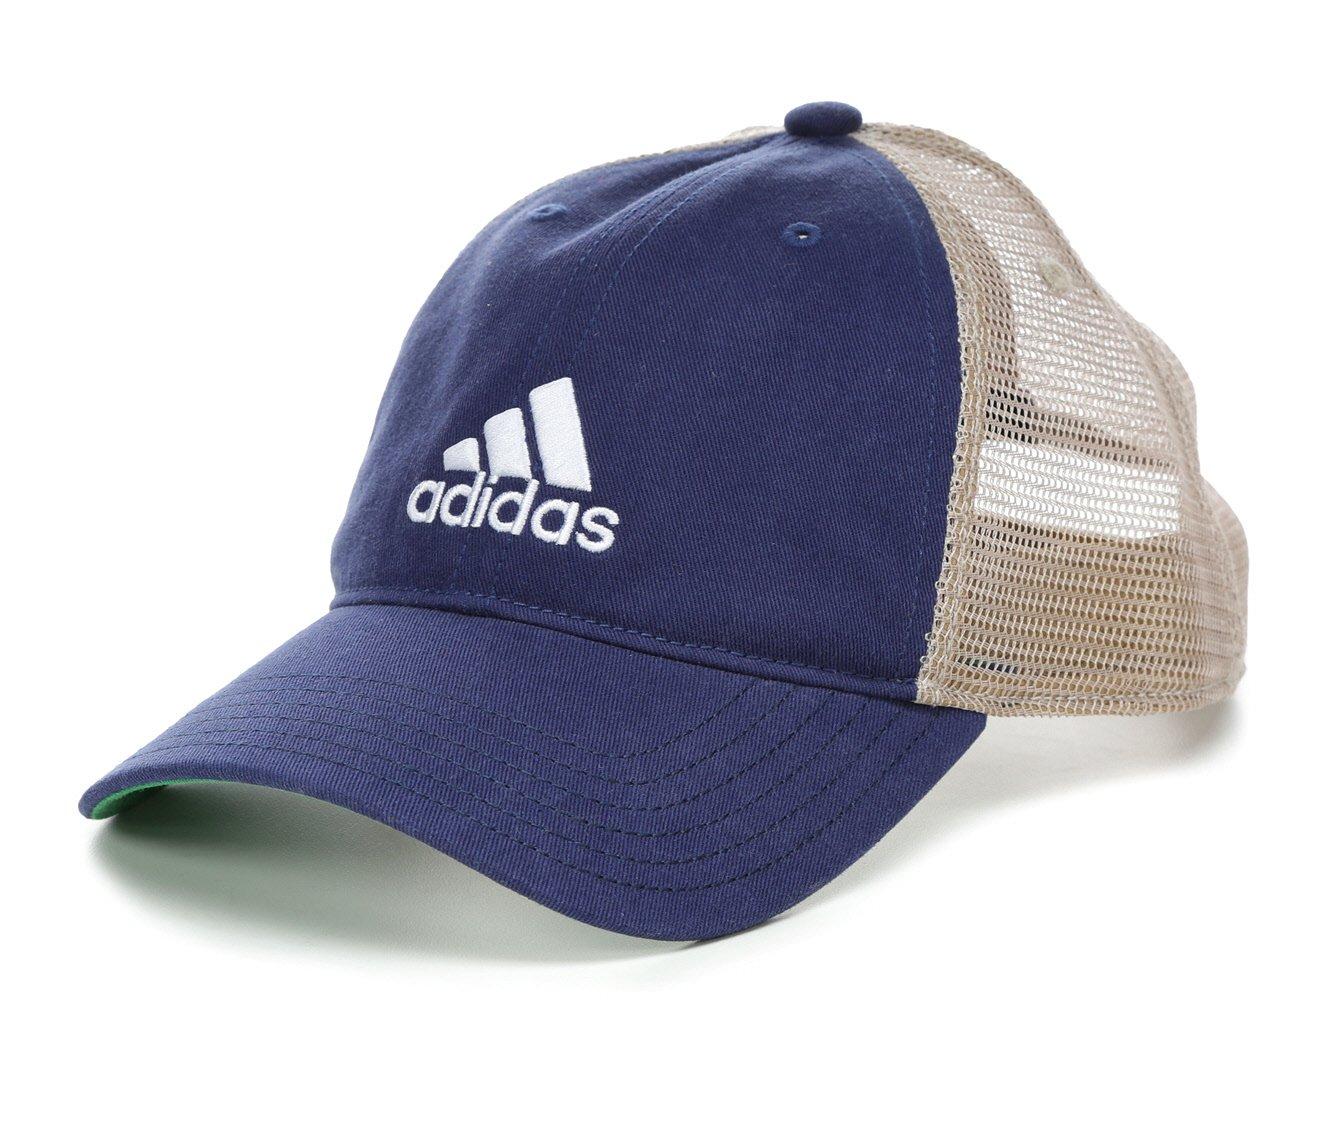 Men's Adidas Relaxed Mesh Snapback Hat, Team Navy Blue/White/Khaki